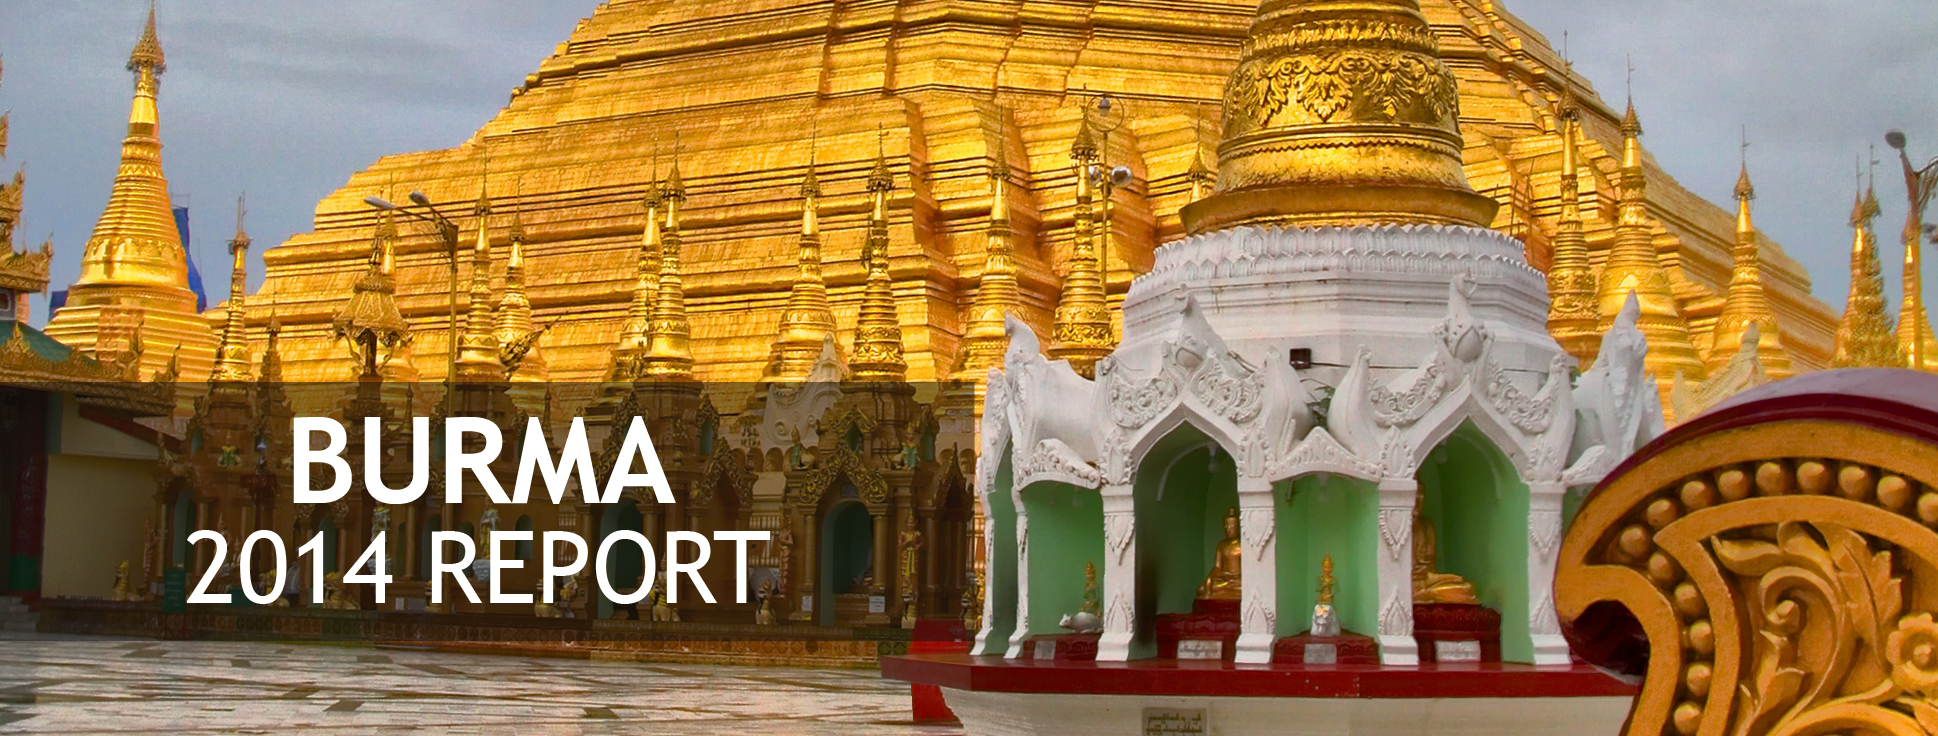 Burma – 2014 Report